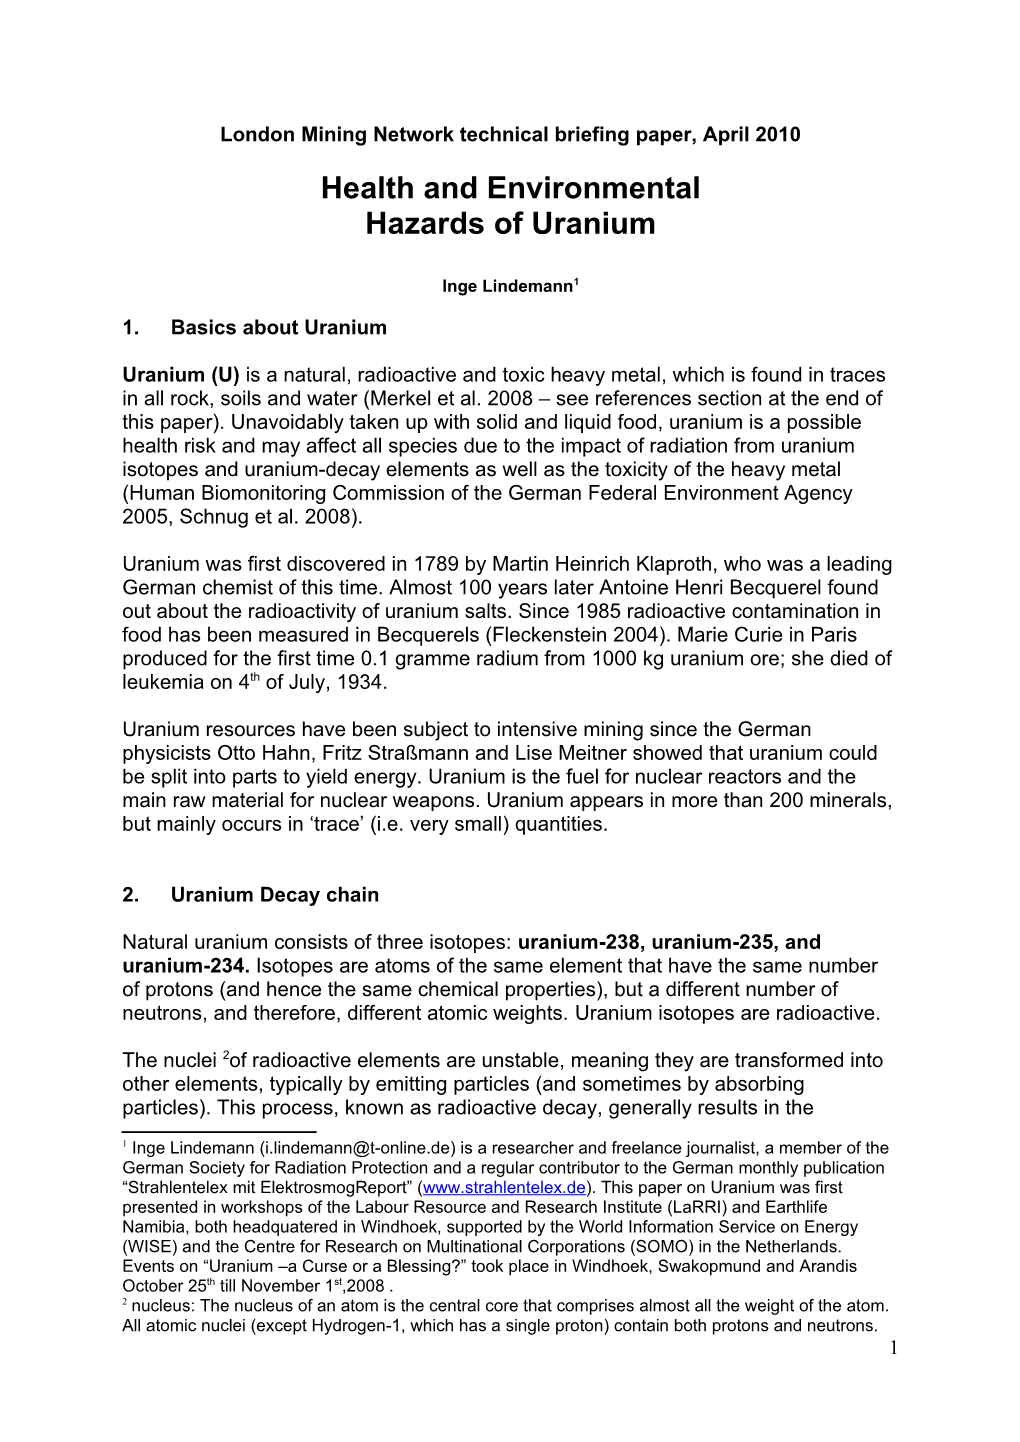 Health and Environmental Hazards of Uranium